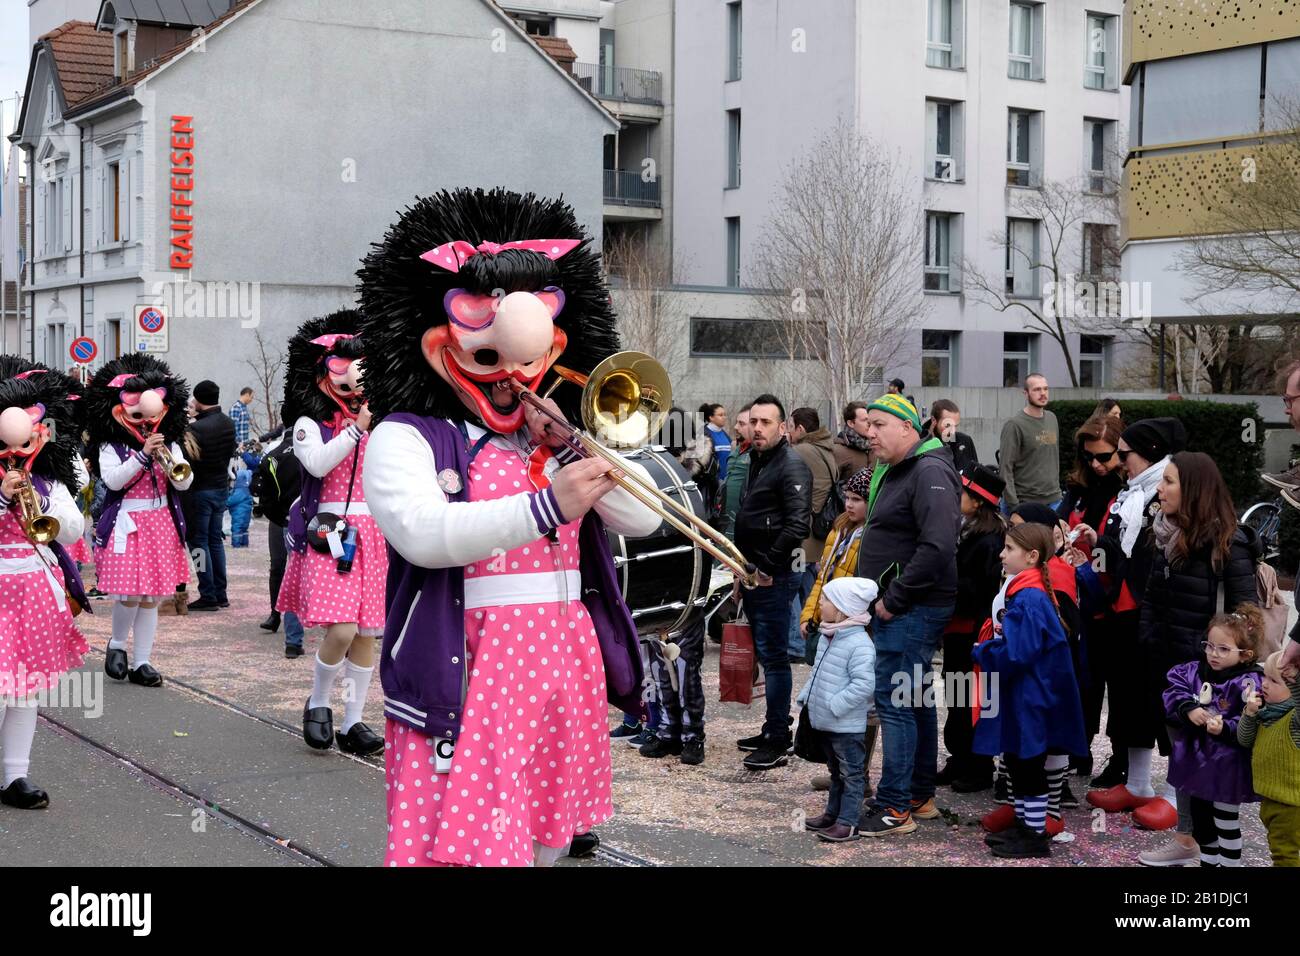 A carnival parade in Allschwil, Basel landschaft, Switzerland Stock Photo